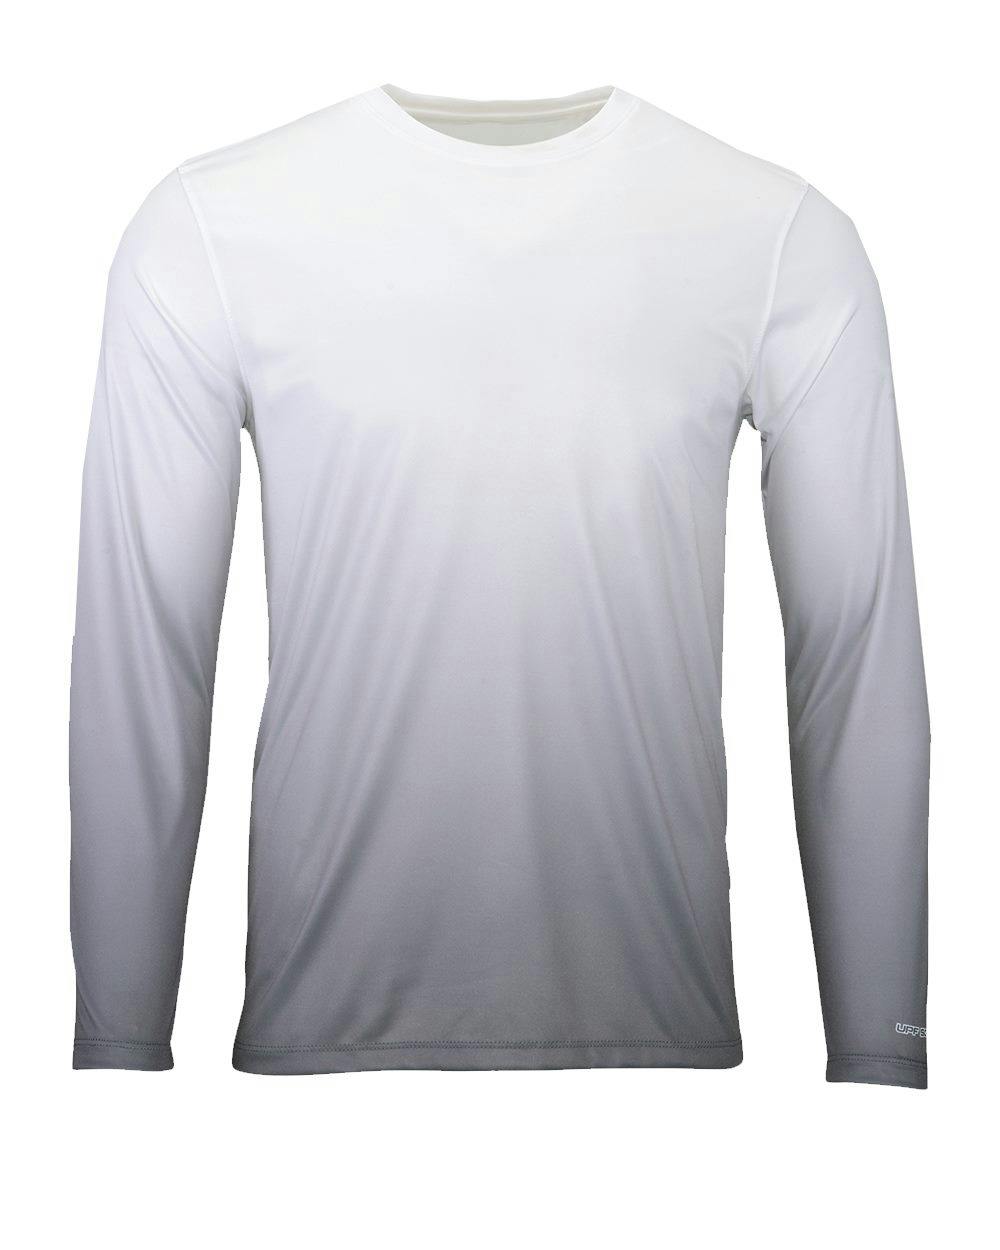 Image for Maui Performance Long Sleeve T-Shirt - 233